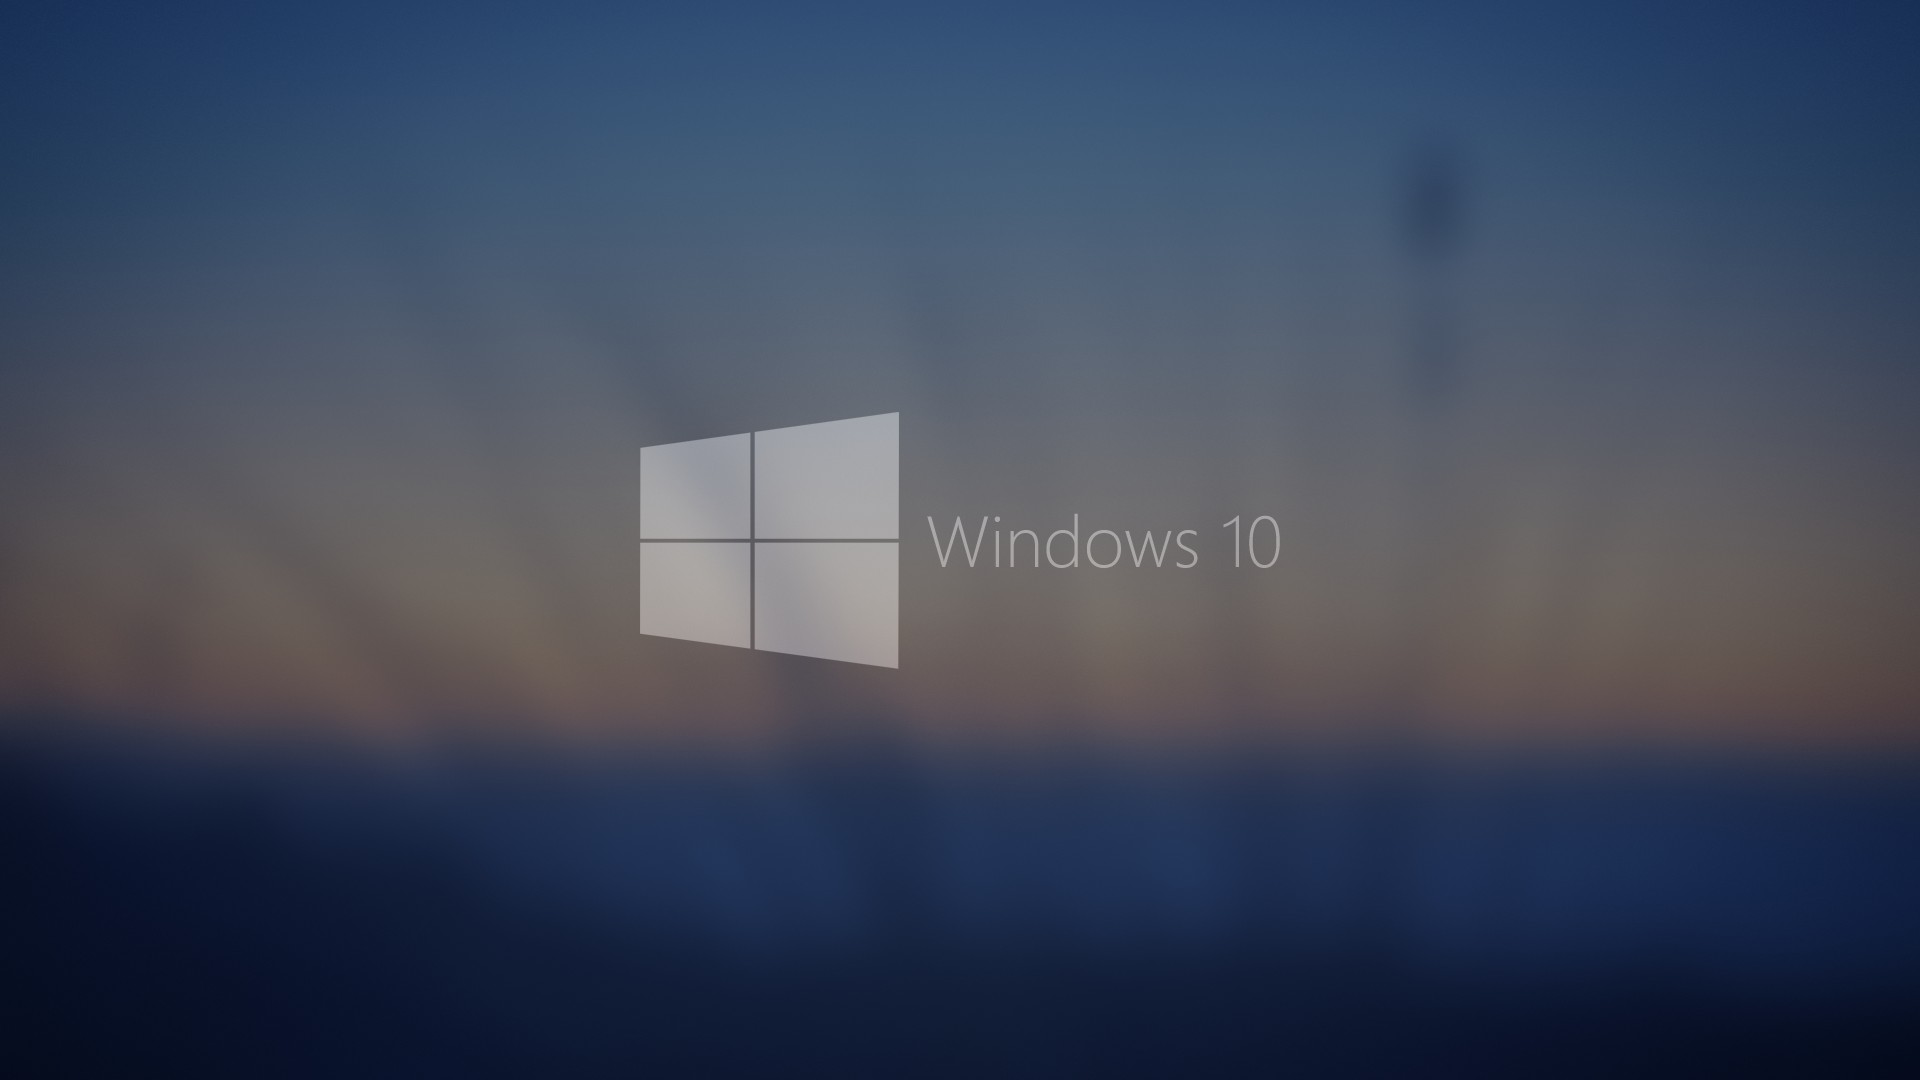 Windows 10 Wallpapers 06 - [1920 x 1080]